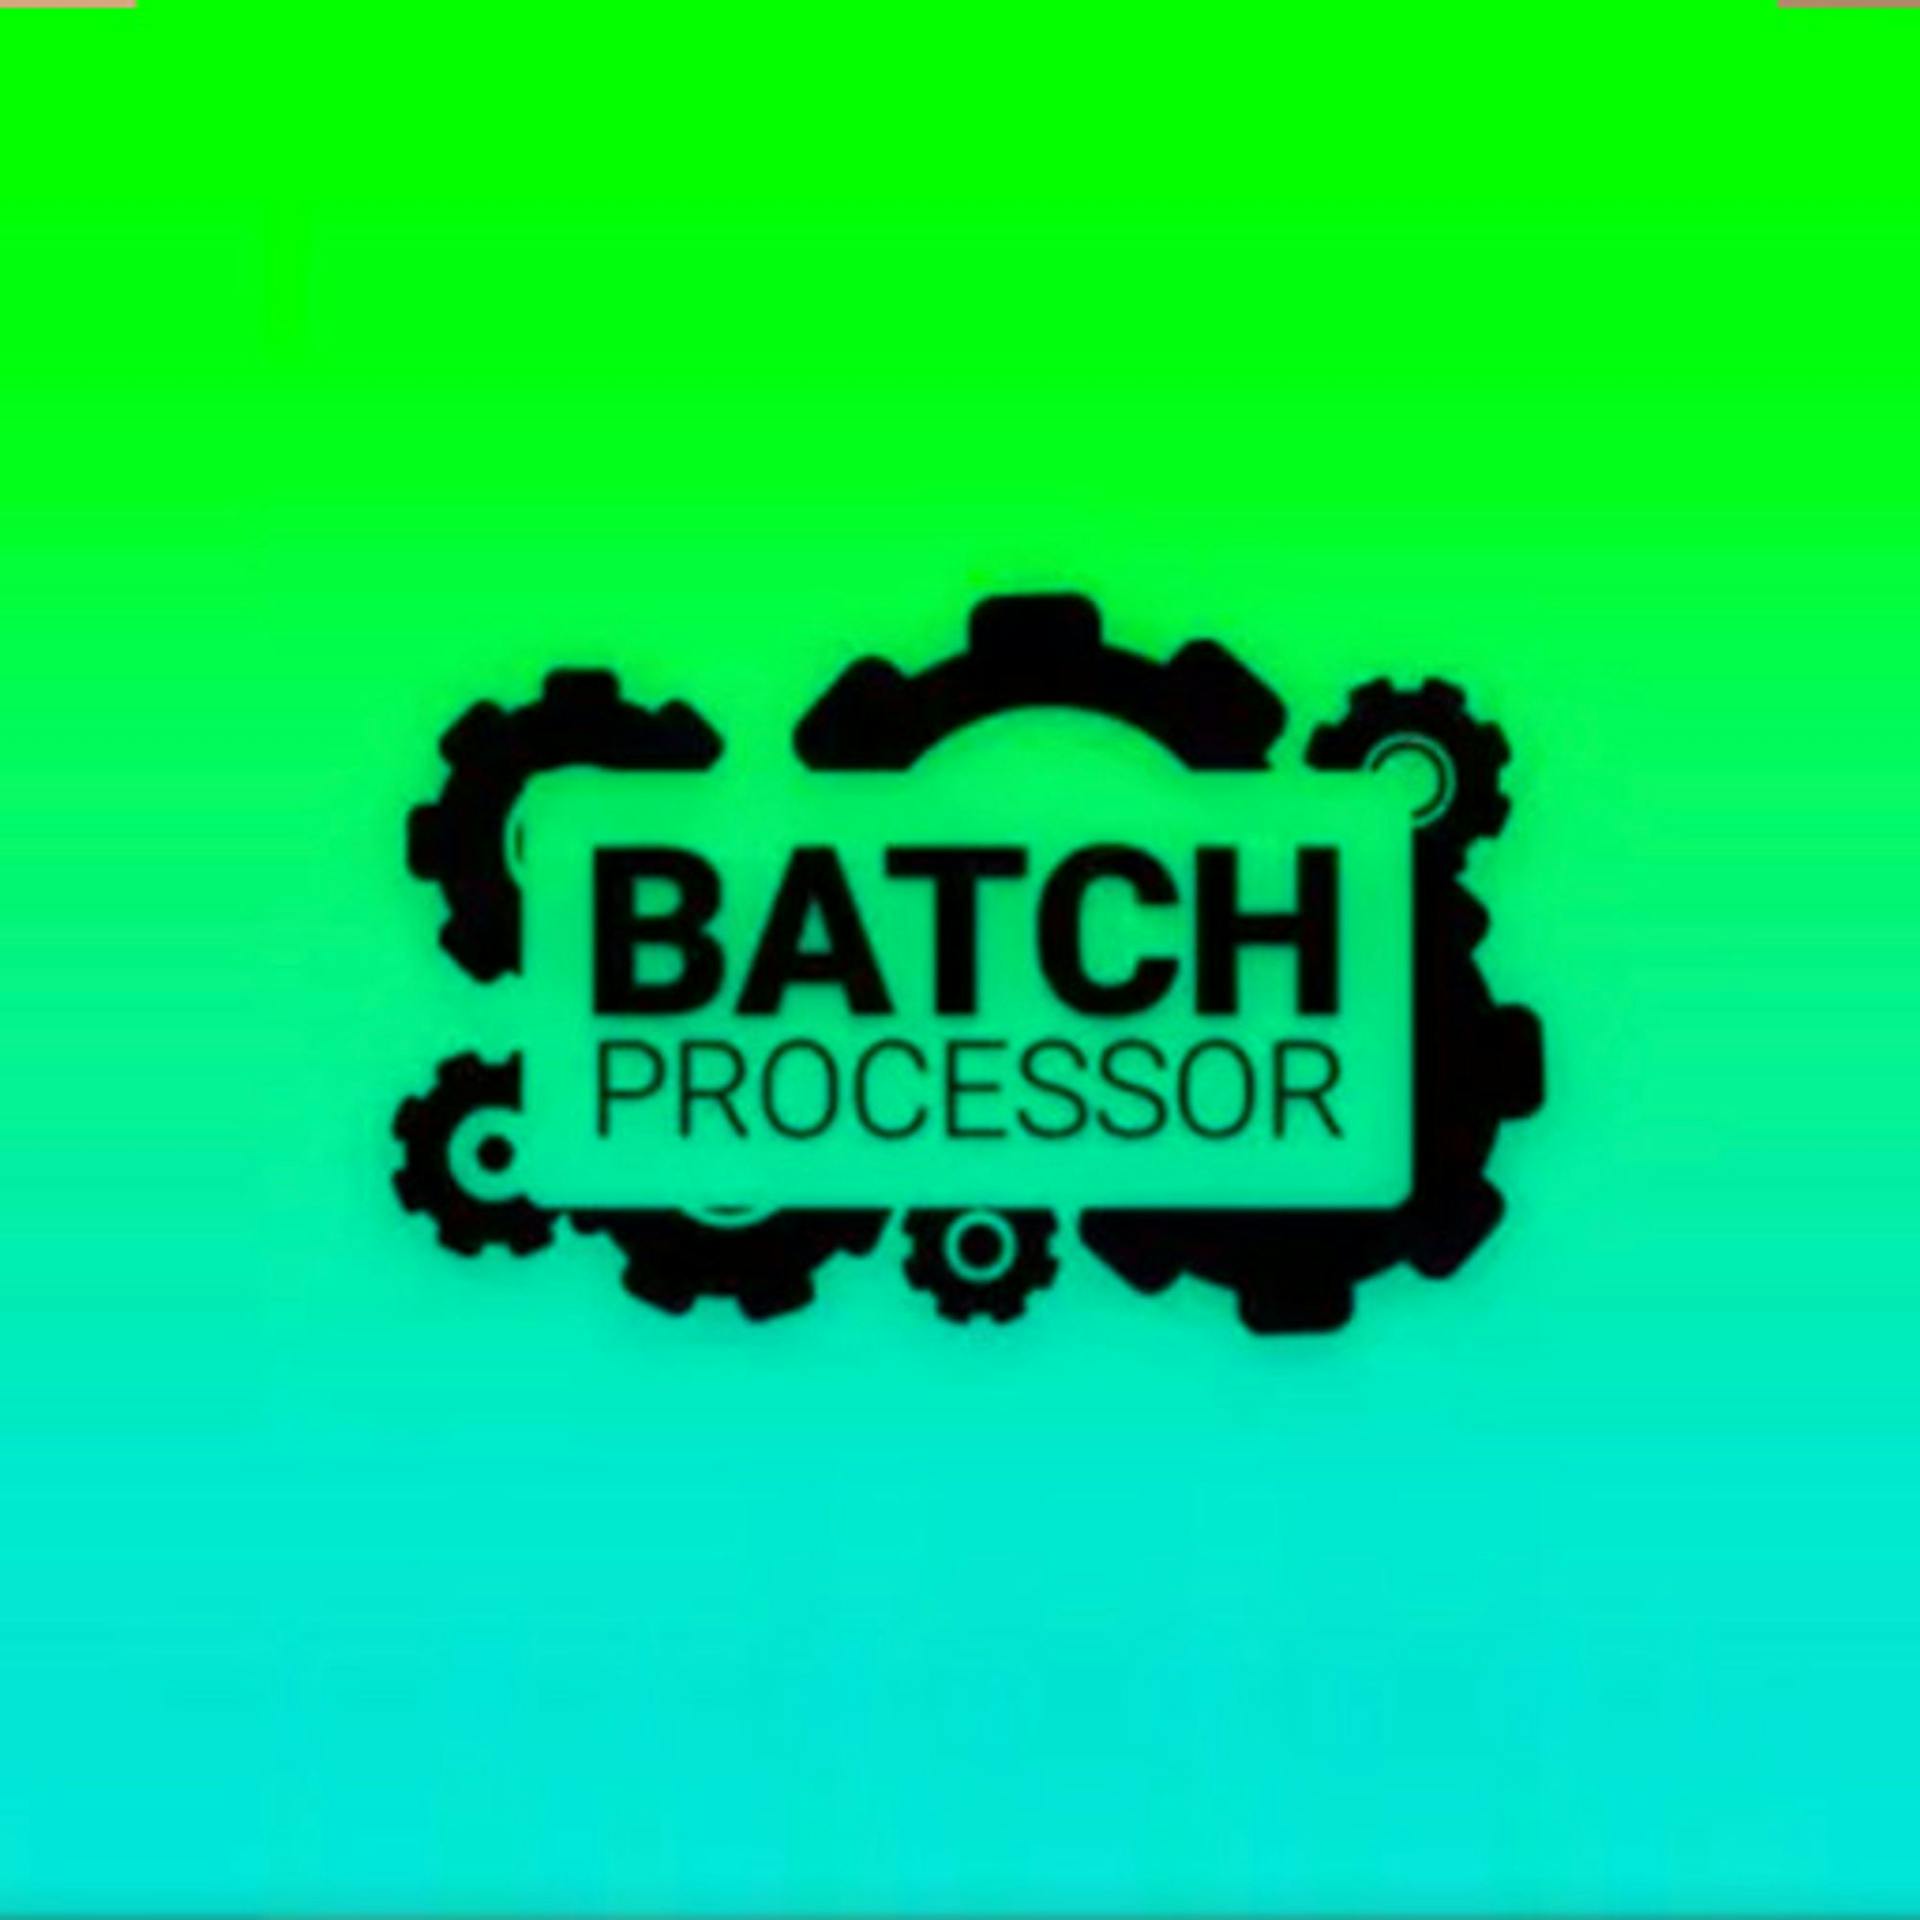 BatchProcessor